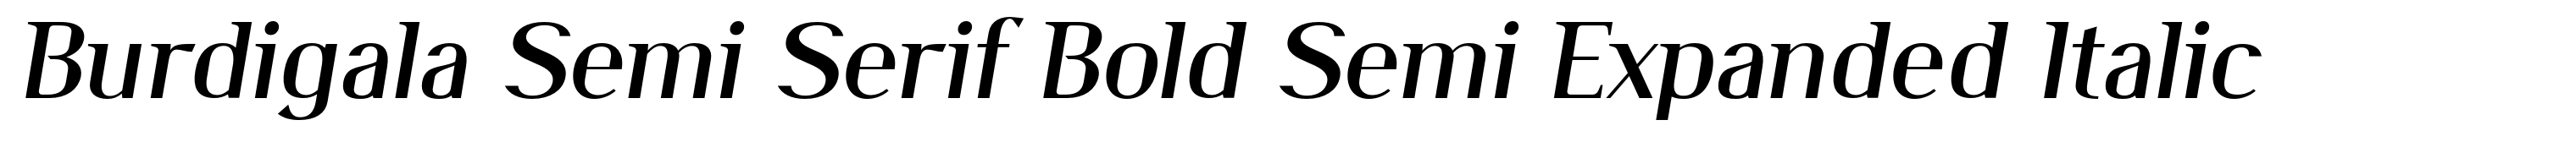 Burdigala Semi Serif Bold Semi Expanded Italic